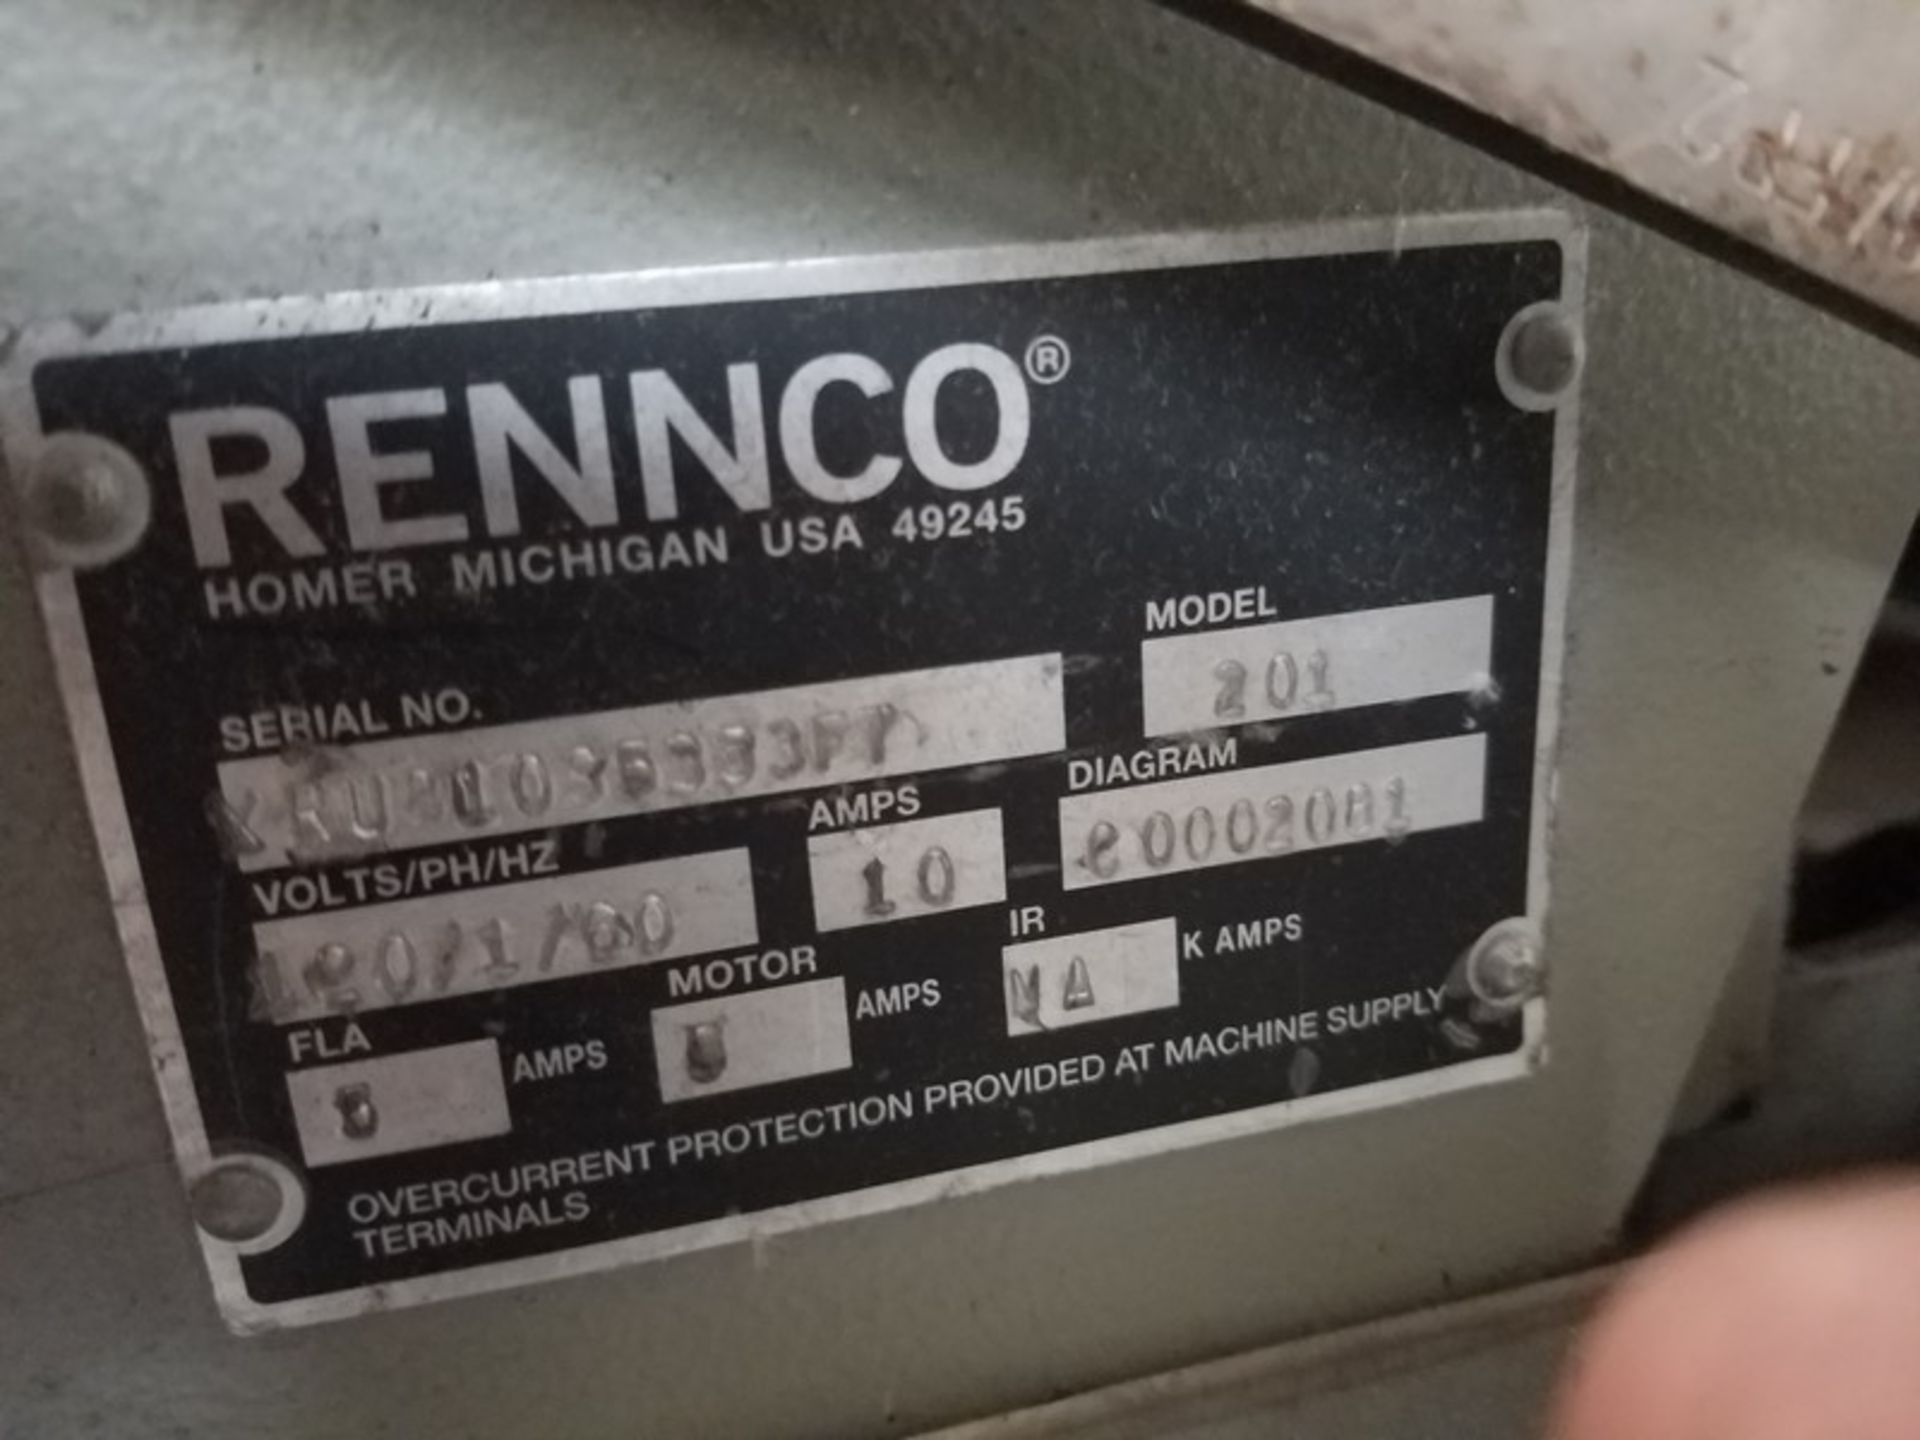 Rennco 201 Automatic drop bag sealer, serial # XRU21036333P7, volt 120, with conveyor - Image 5 of 5